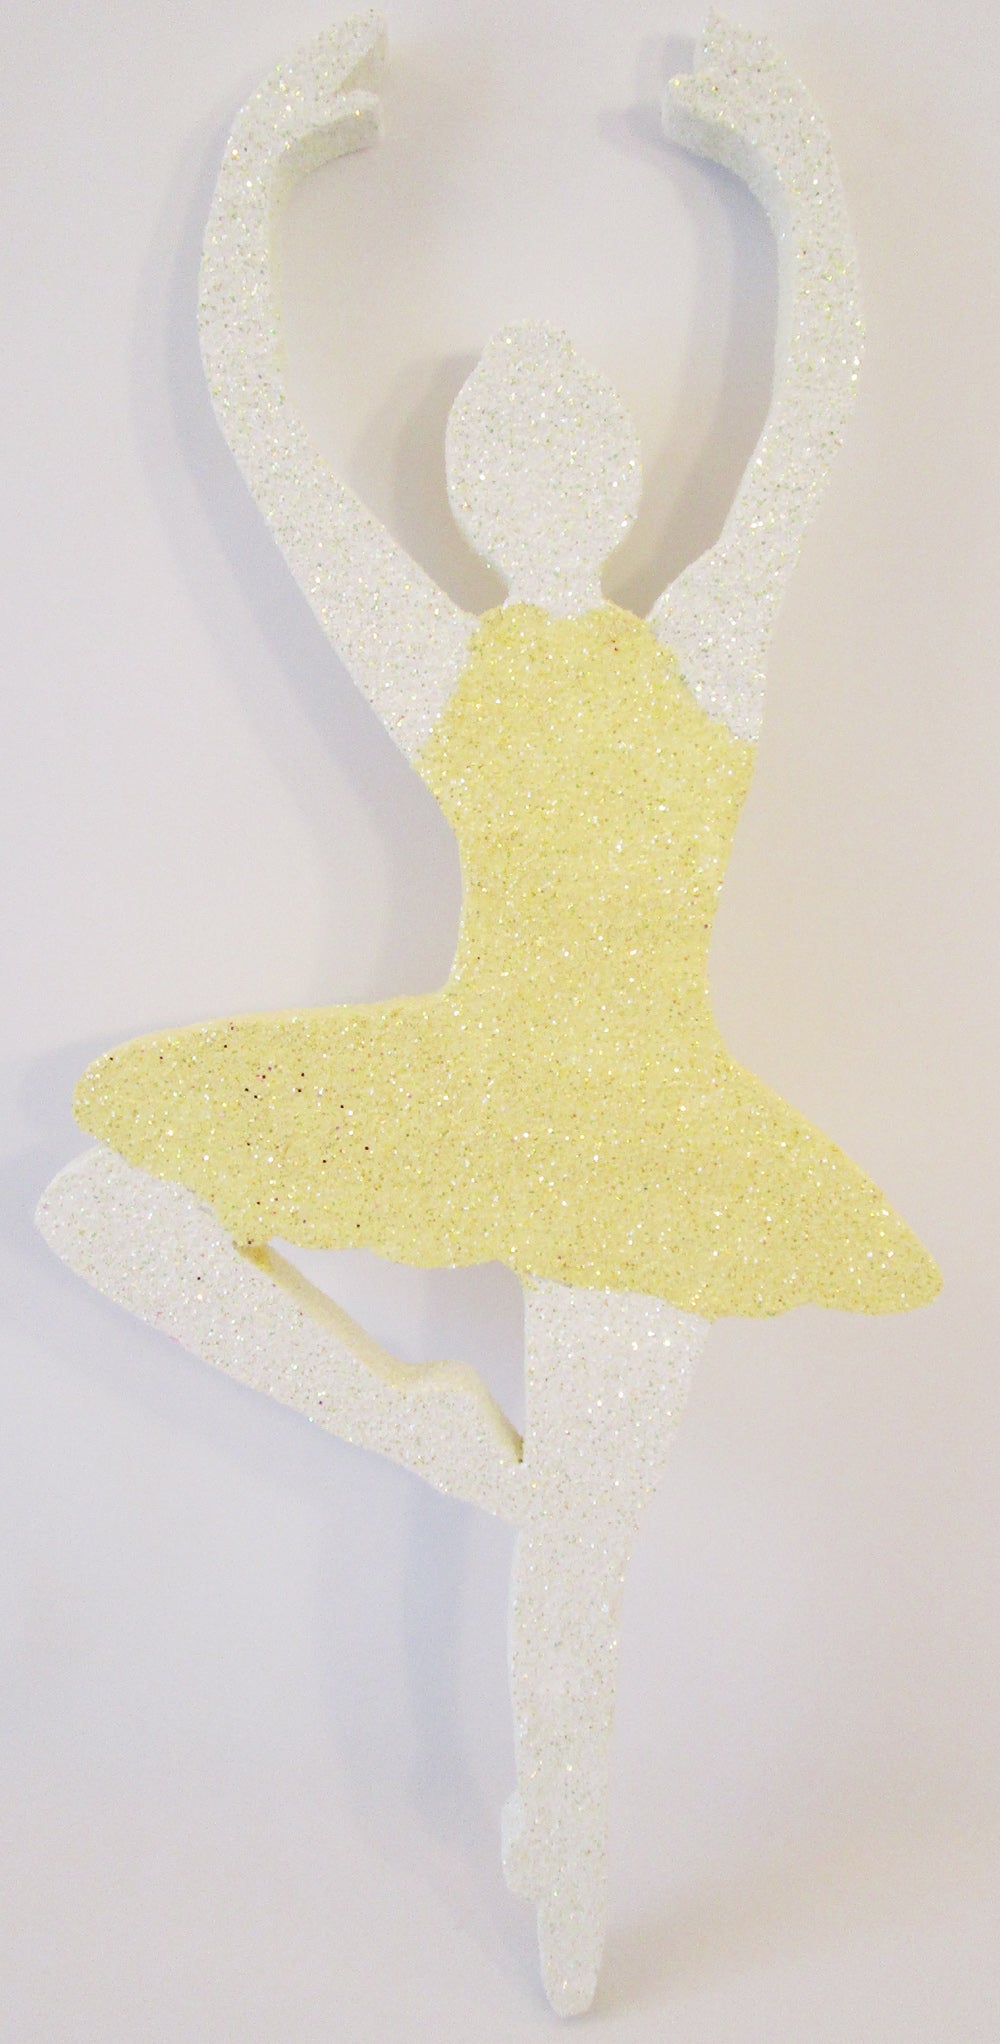 Ballerina styrofoam cutout - Designs by Ginny